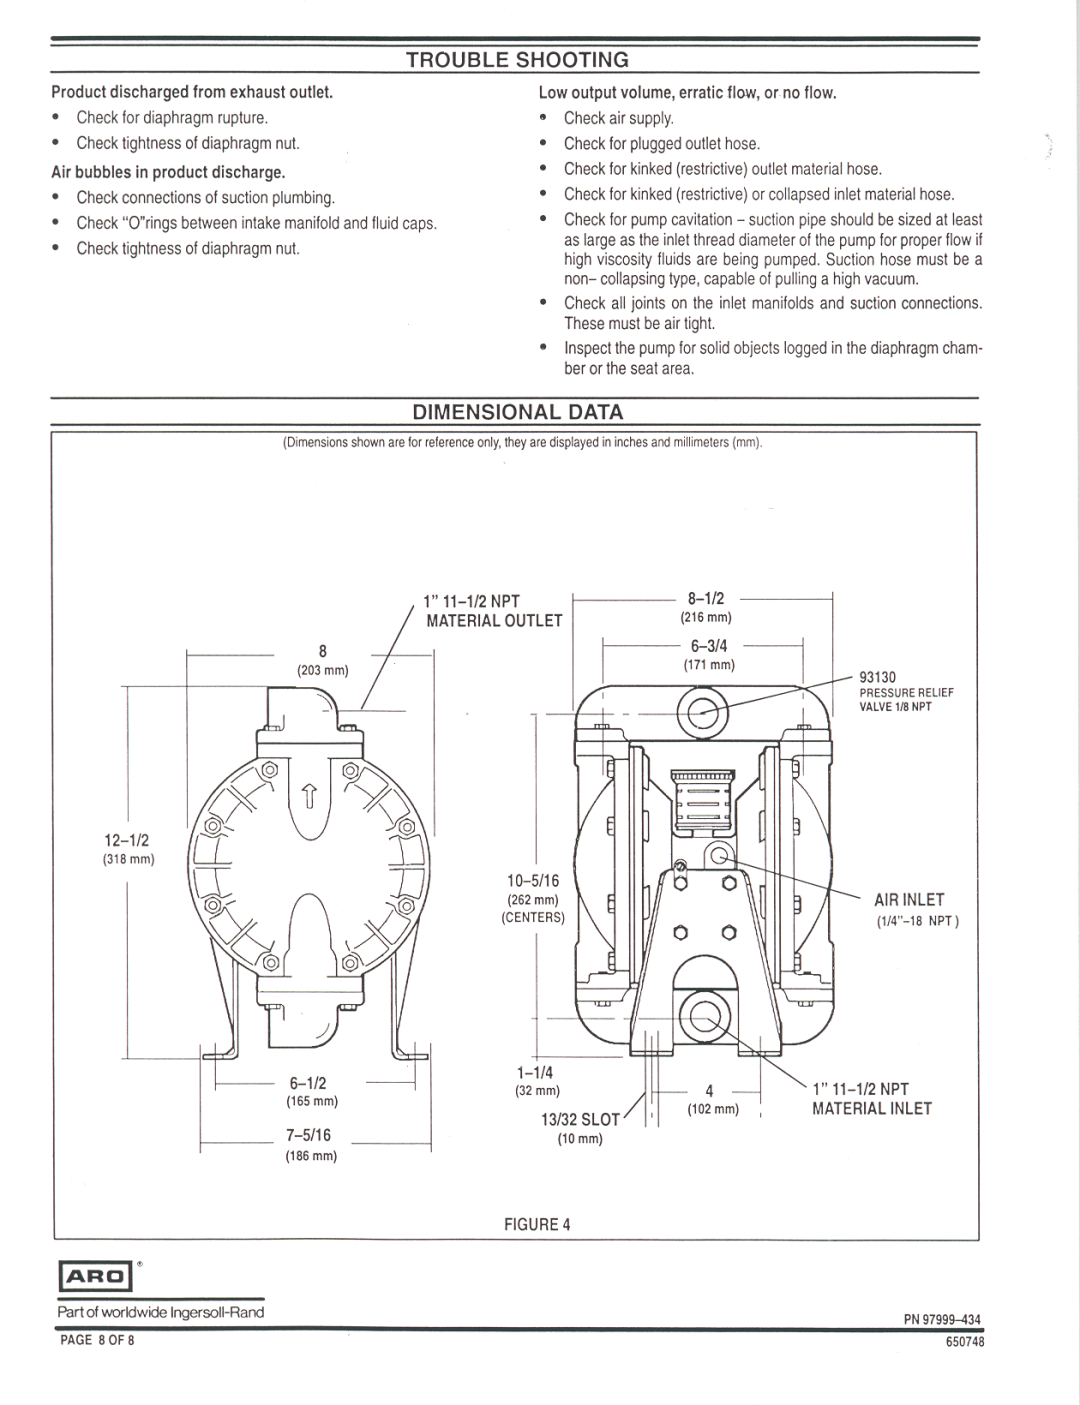 Ingersoll-Rand 650748 manual 